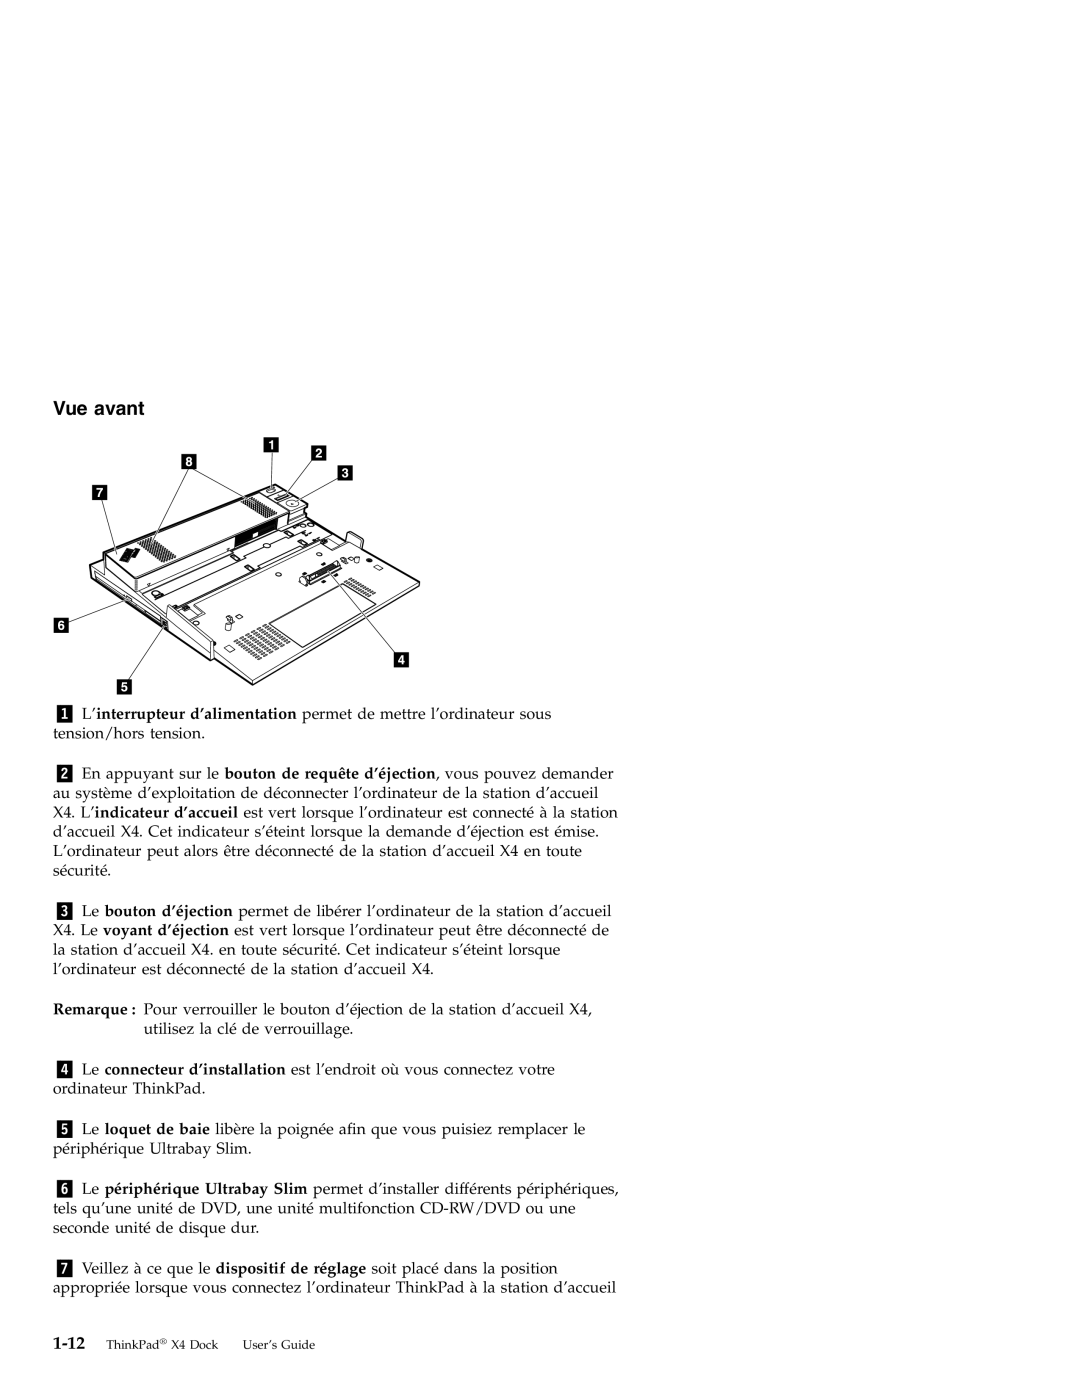 IBM manual Vue avant, ThinkPad X4 Dock User’s Guide 